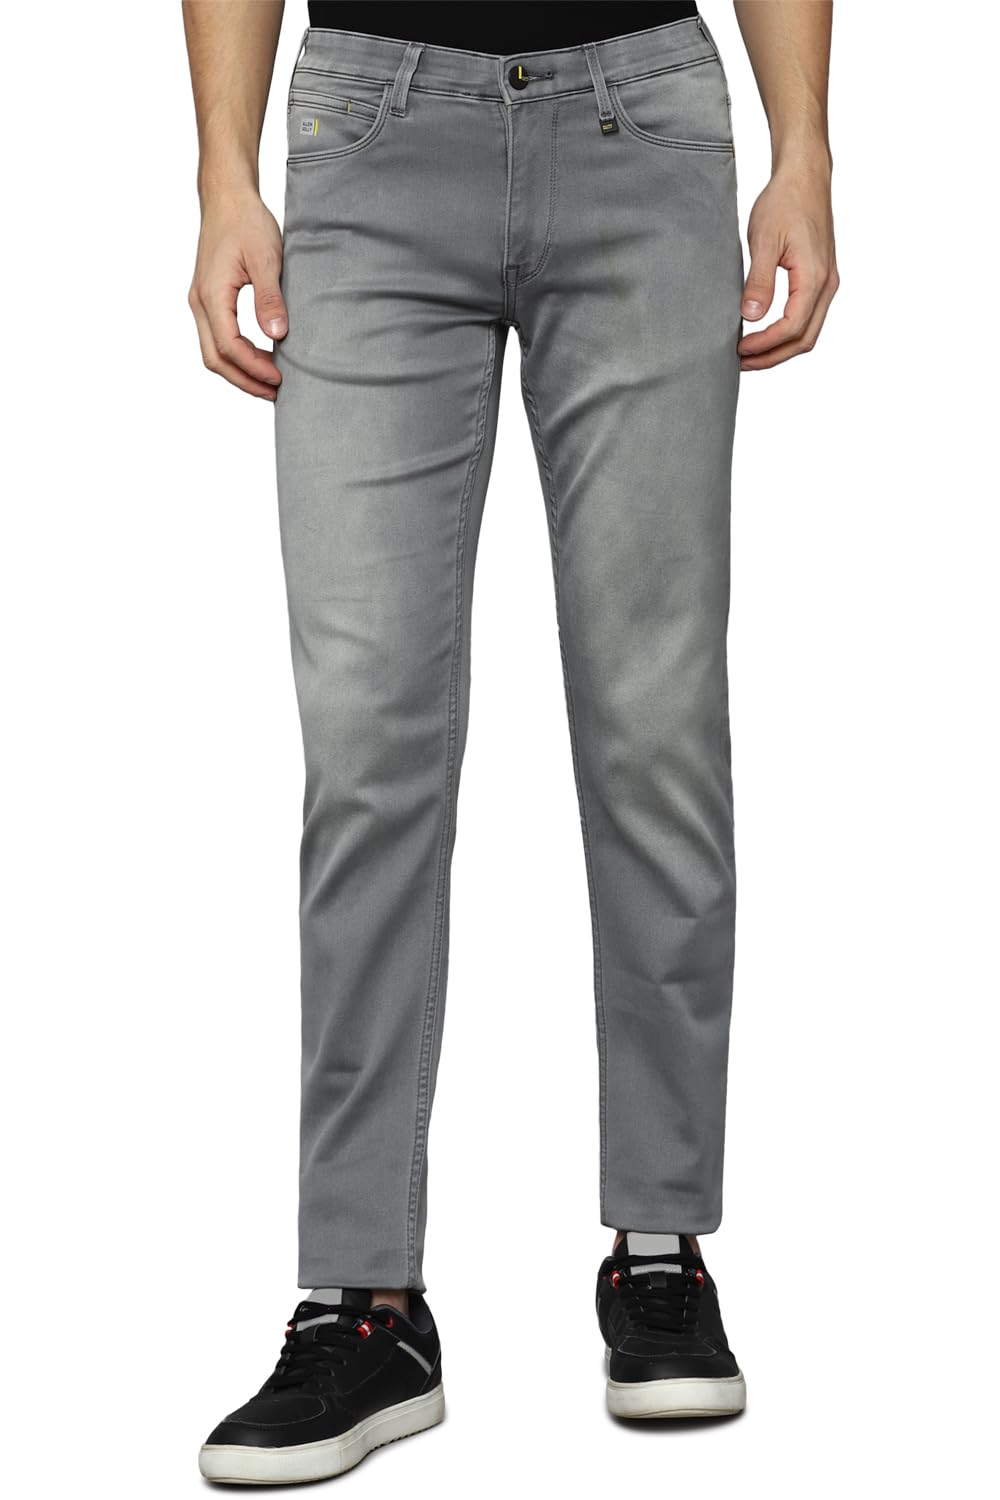 Allen Solly Men's Skinny Jeans (ALDNVSKFQ68724_Grey 